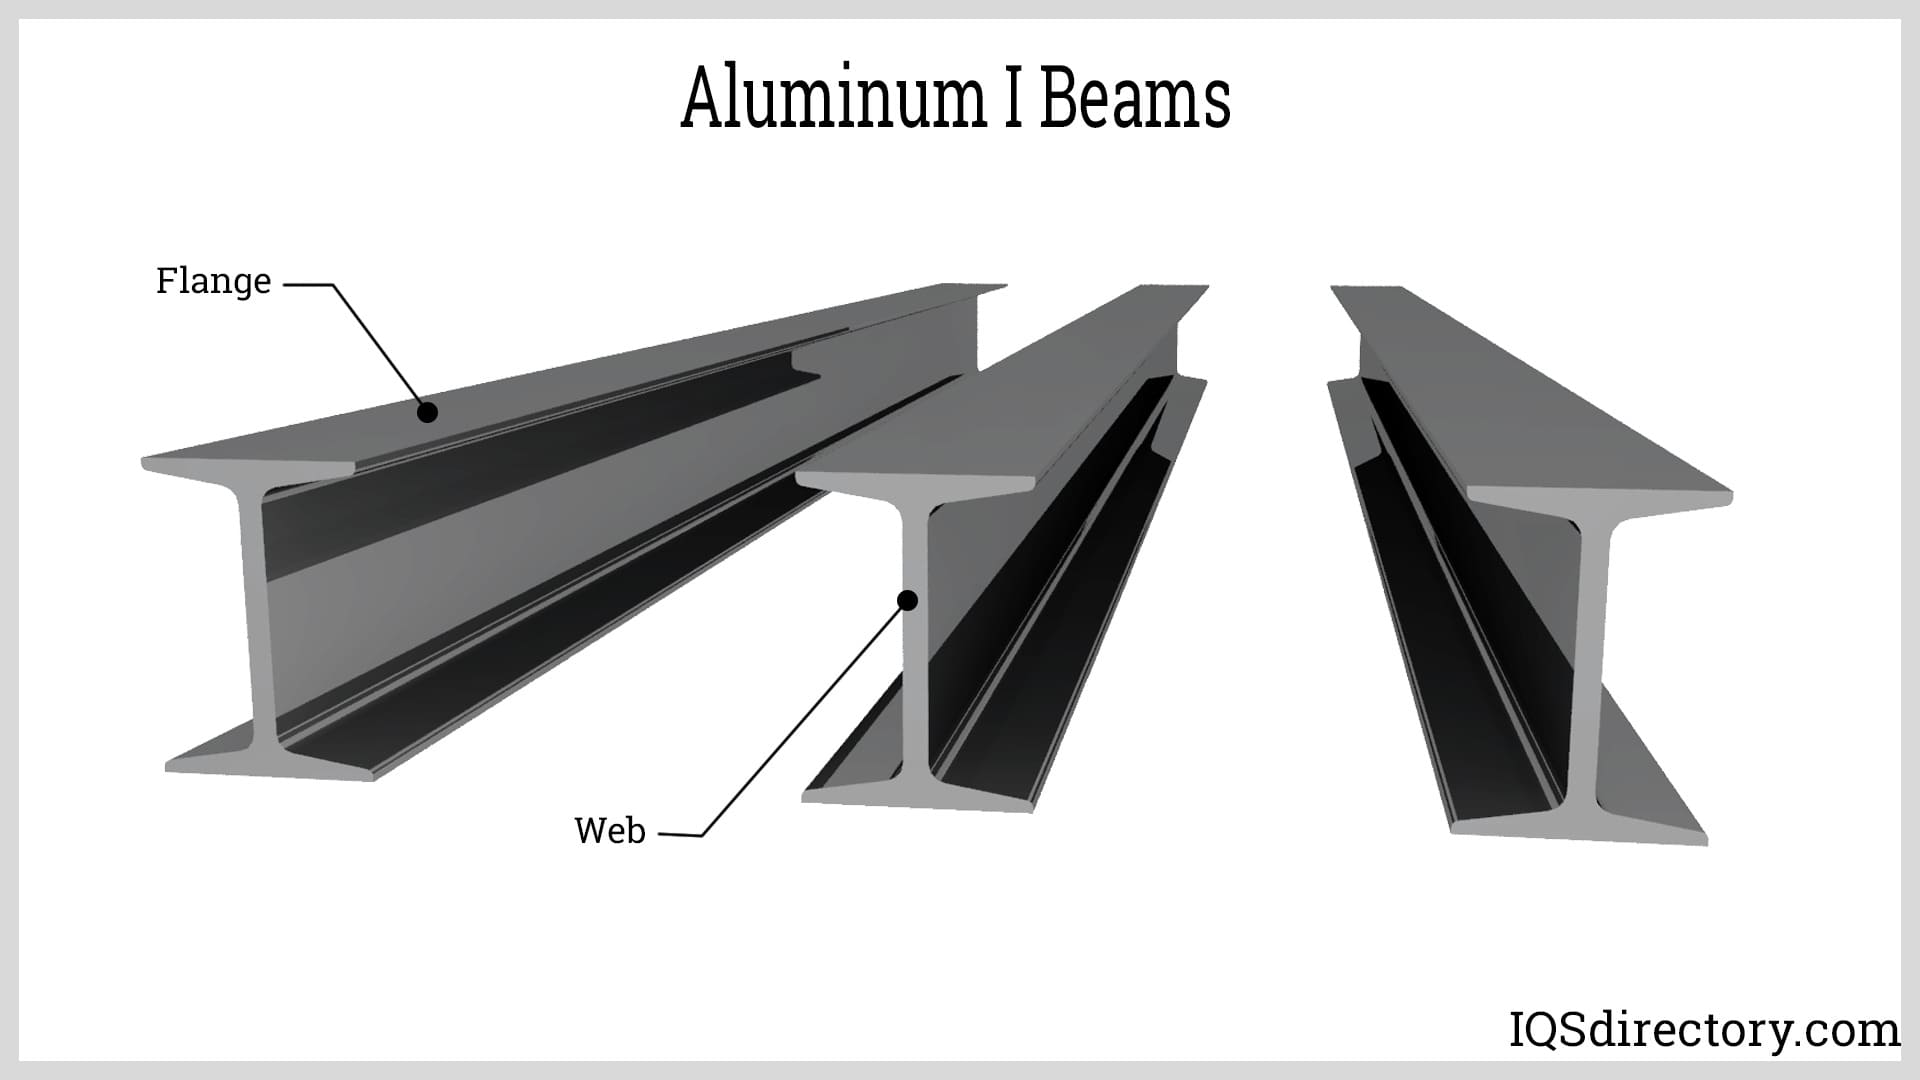 Aluminum I Beams